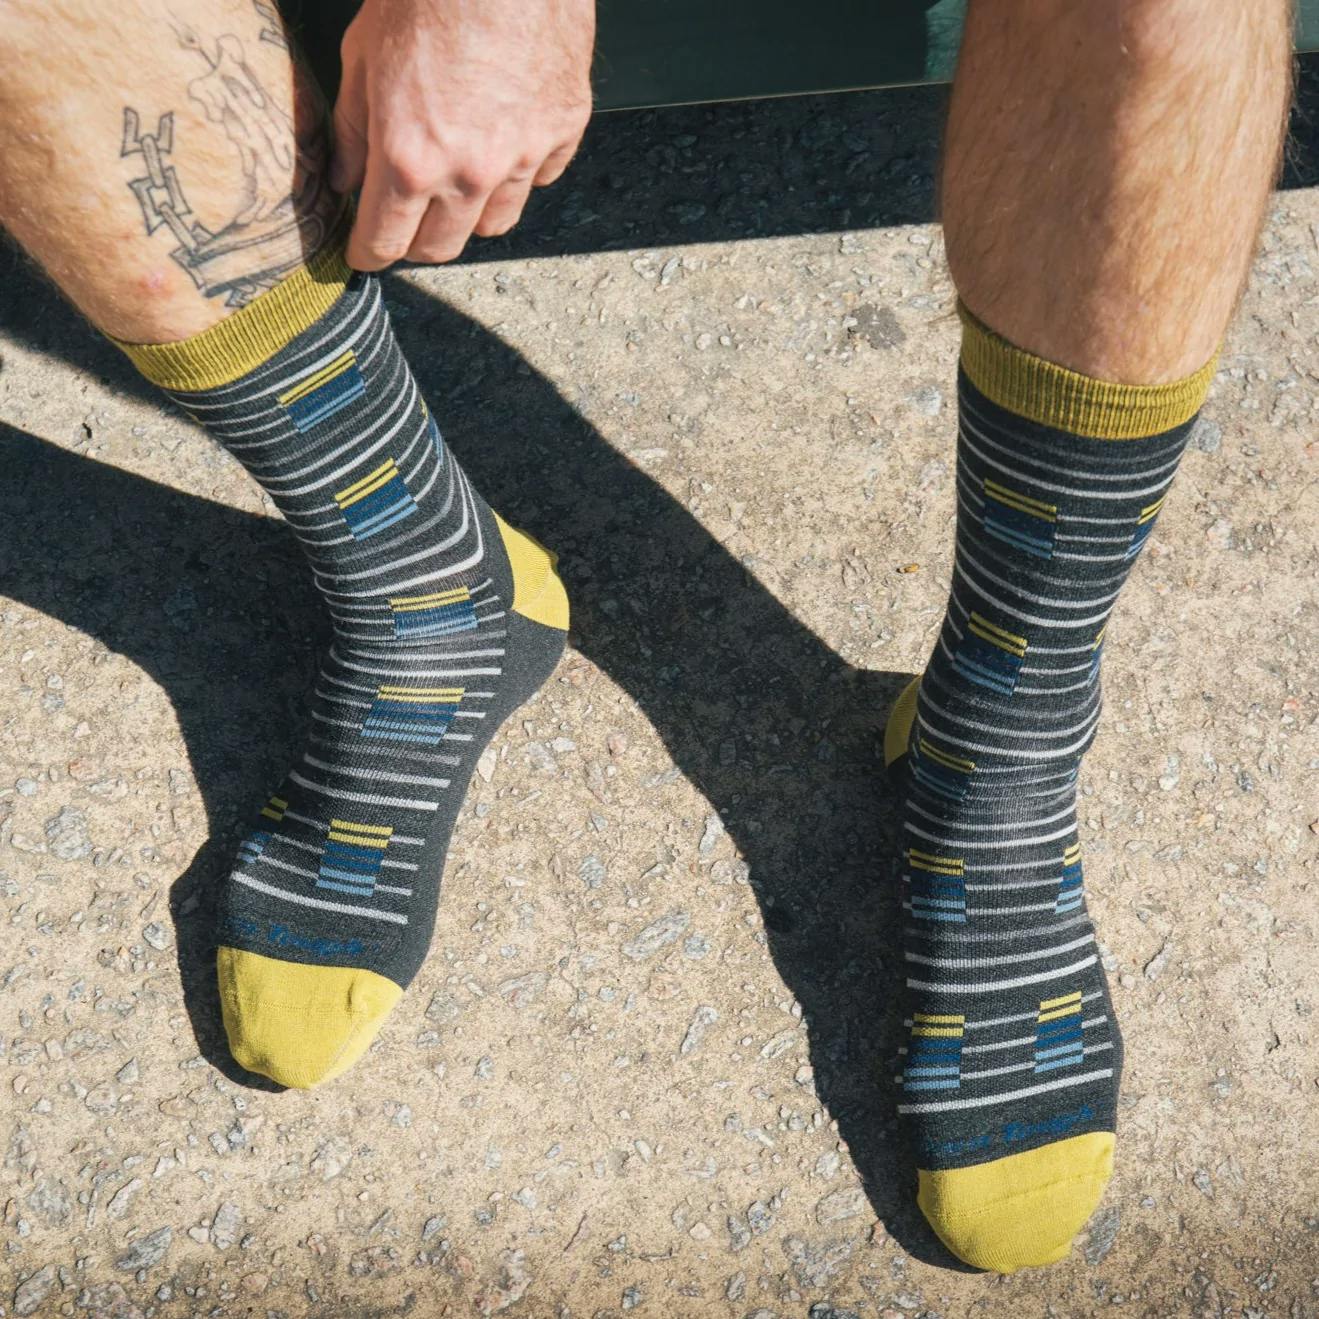 Darn Tough Men's Mesa Crew Lightweight Lifestyle Socks